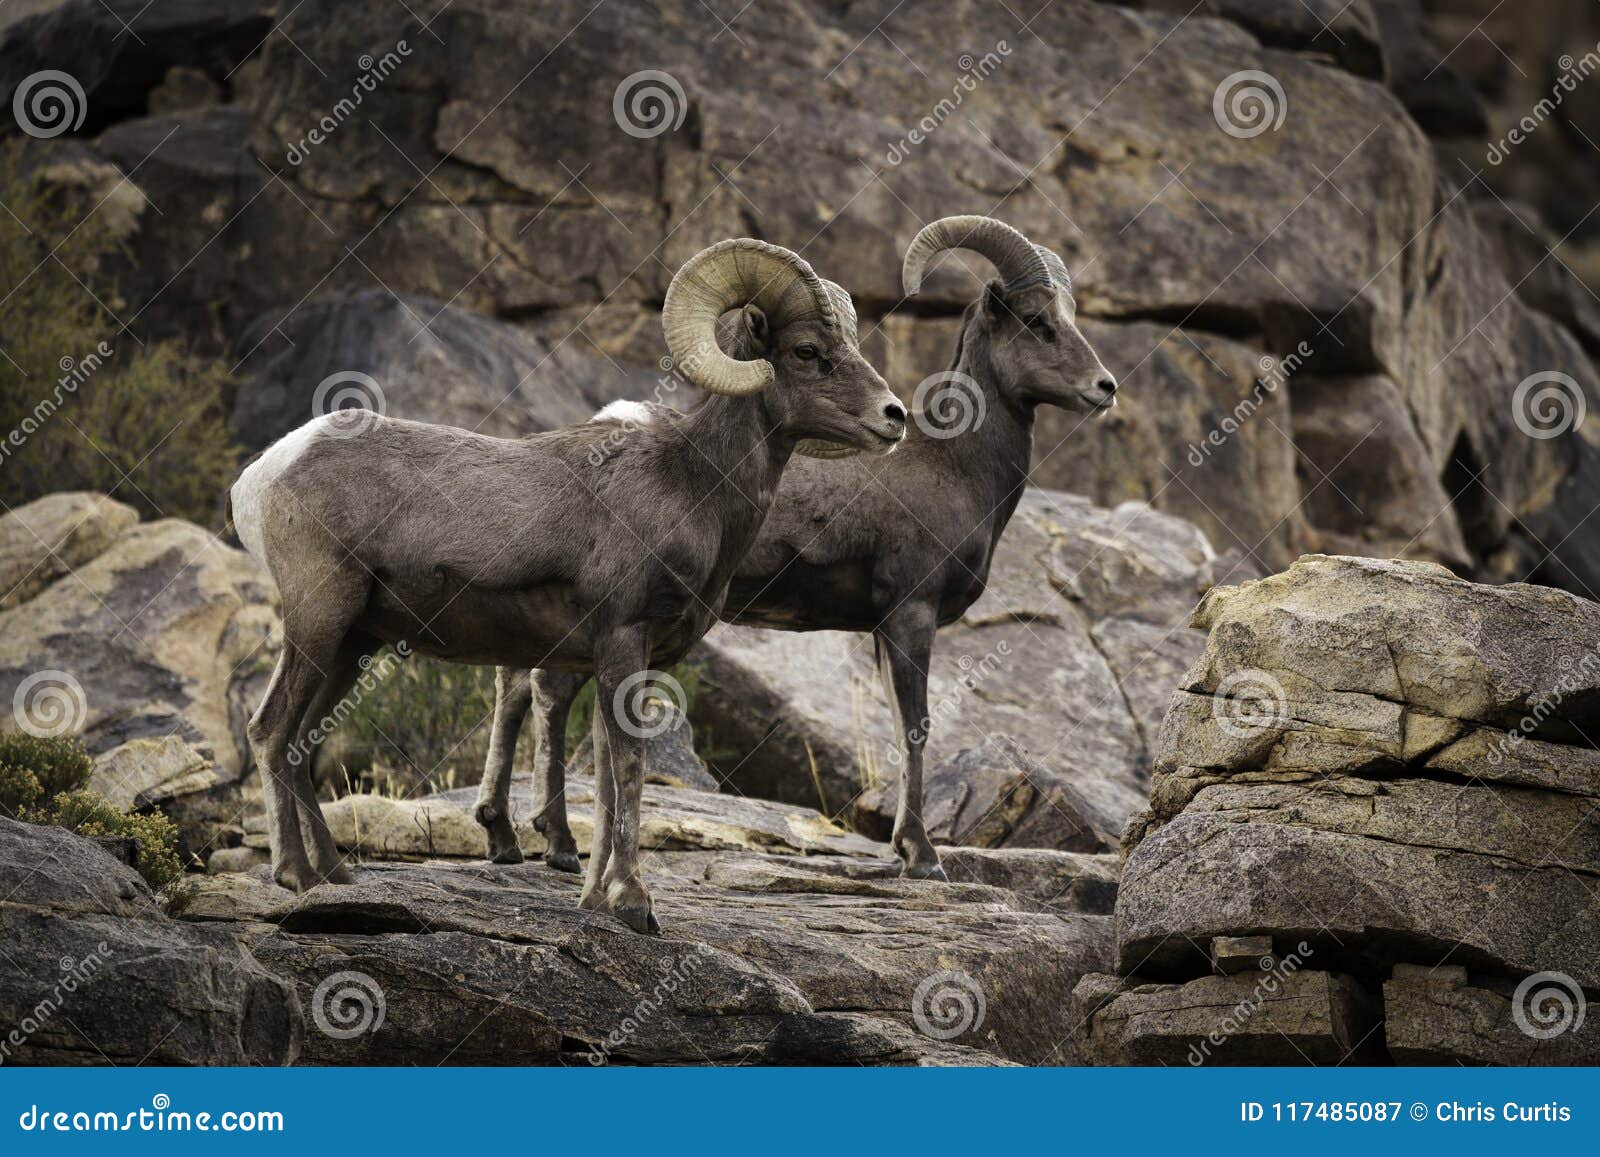 ram and ewe bighorn sheep pair in joshua tree national park